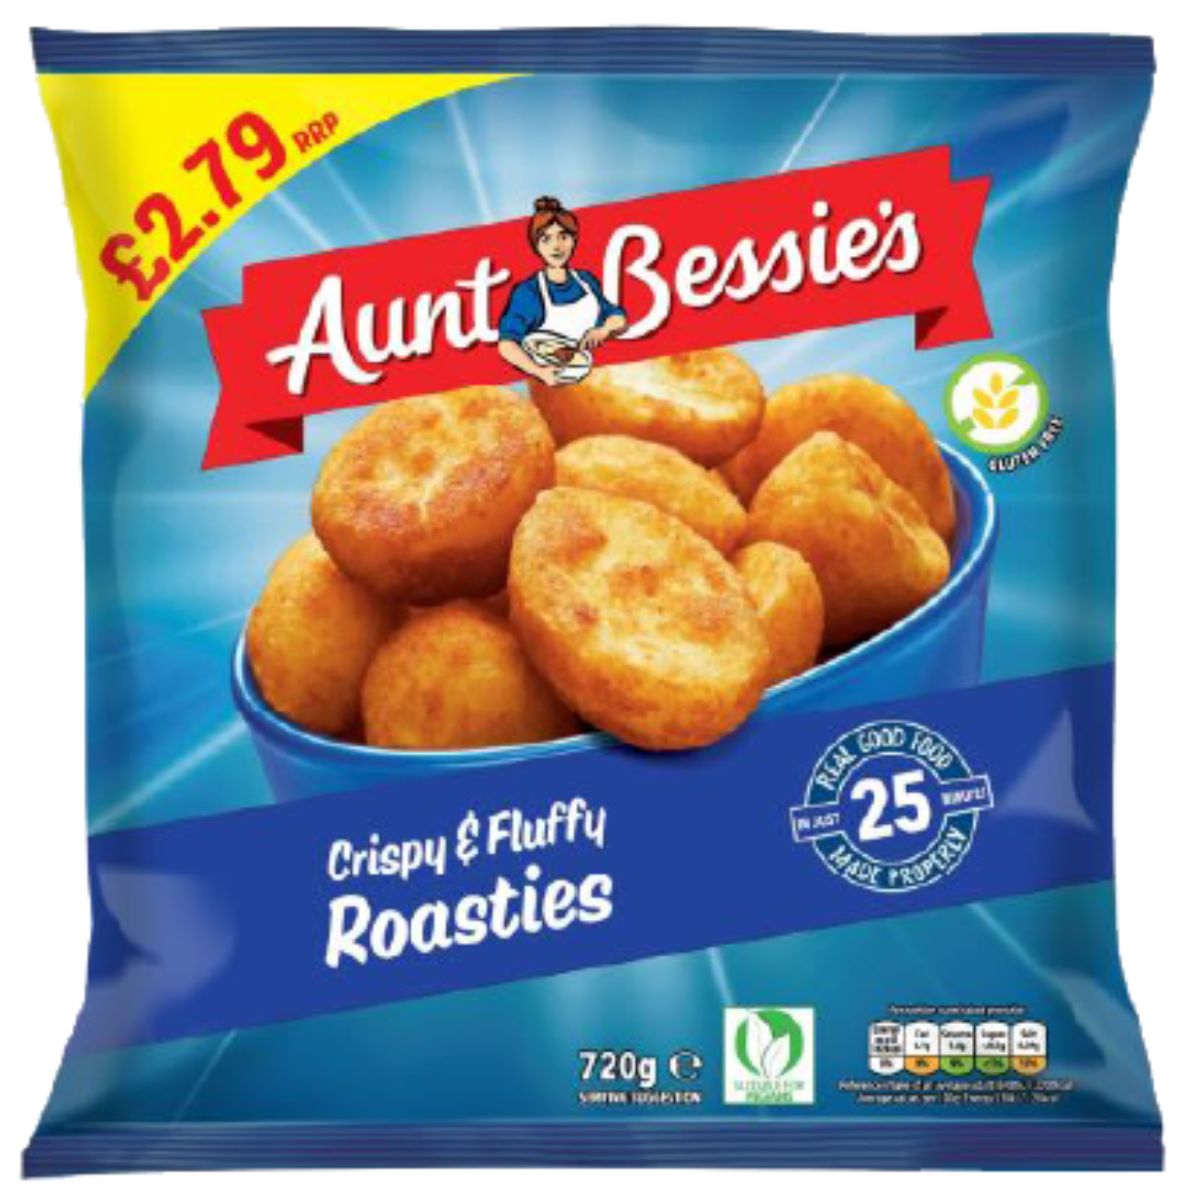 Aunt Bessie's crispy & fluffy roasties.